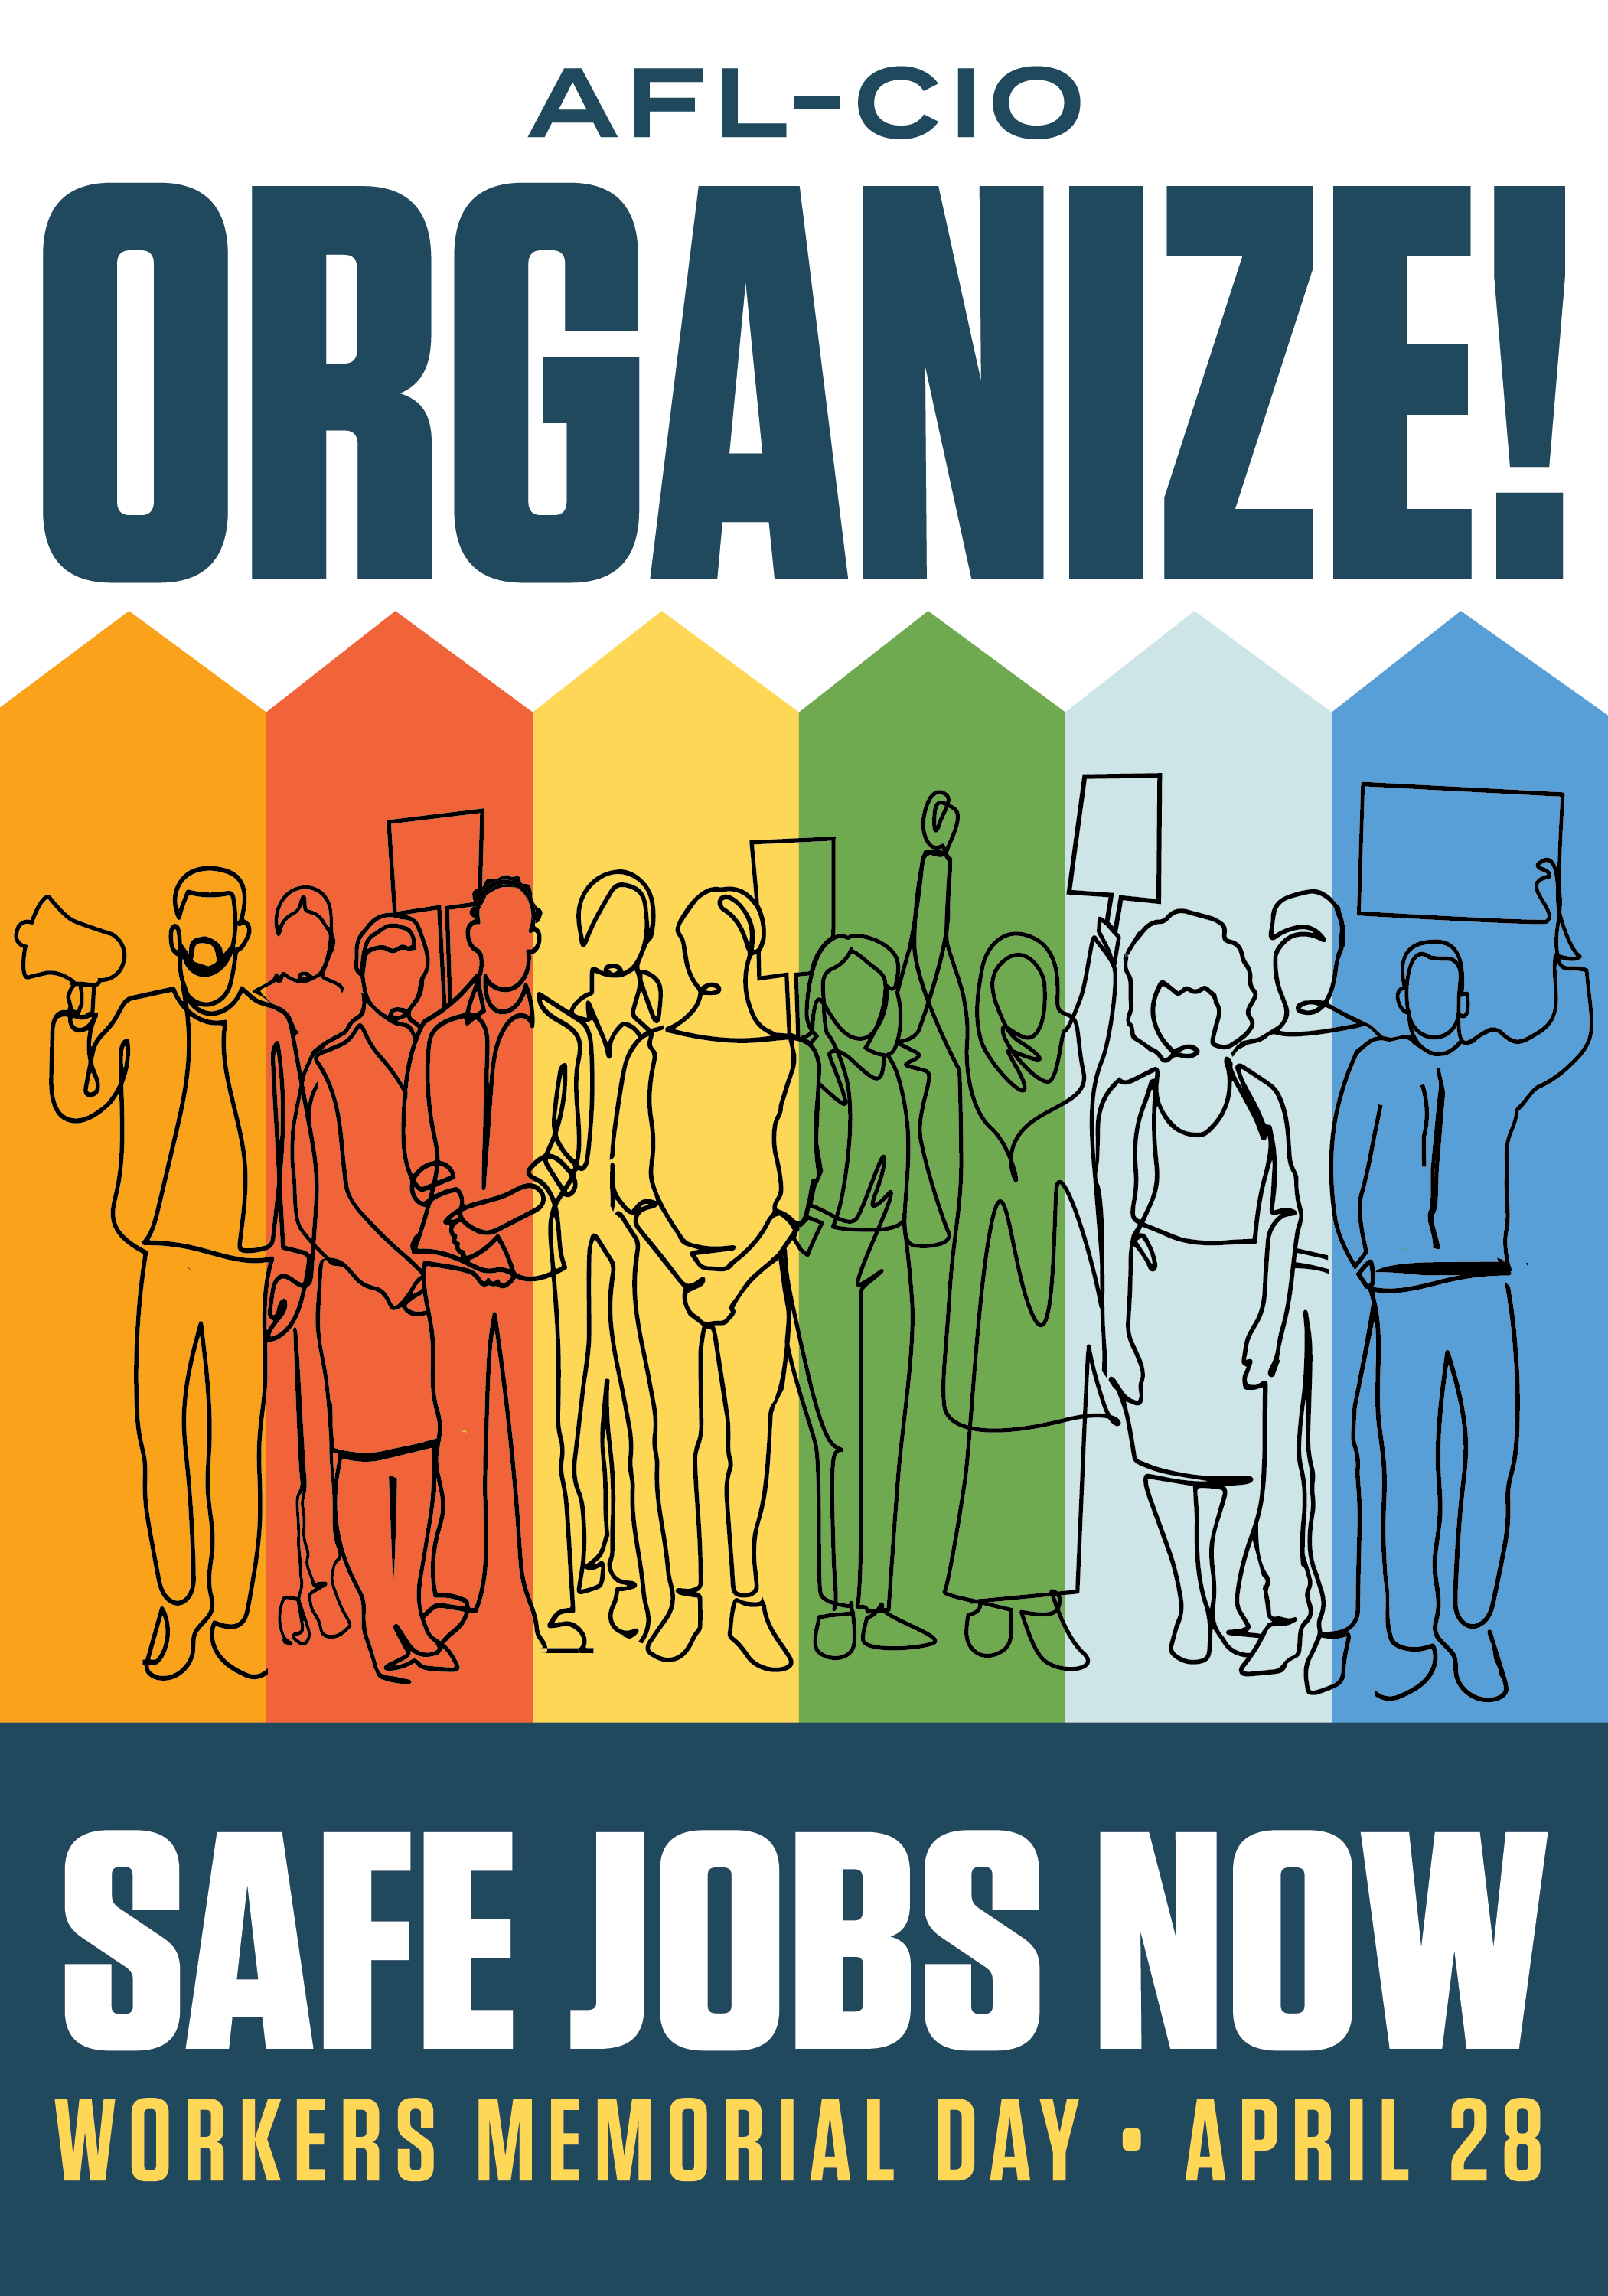 Organize! Safe Jobs NOW